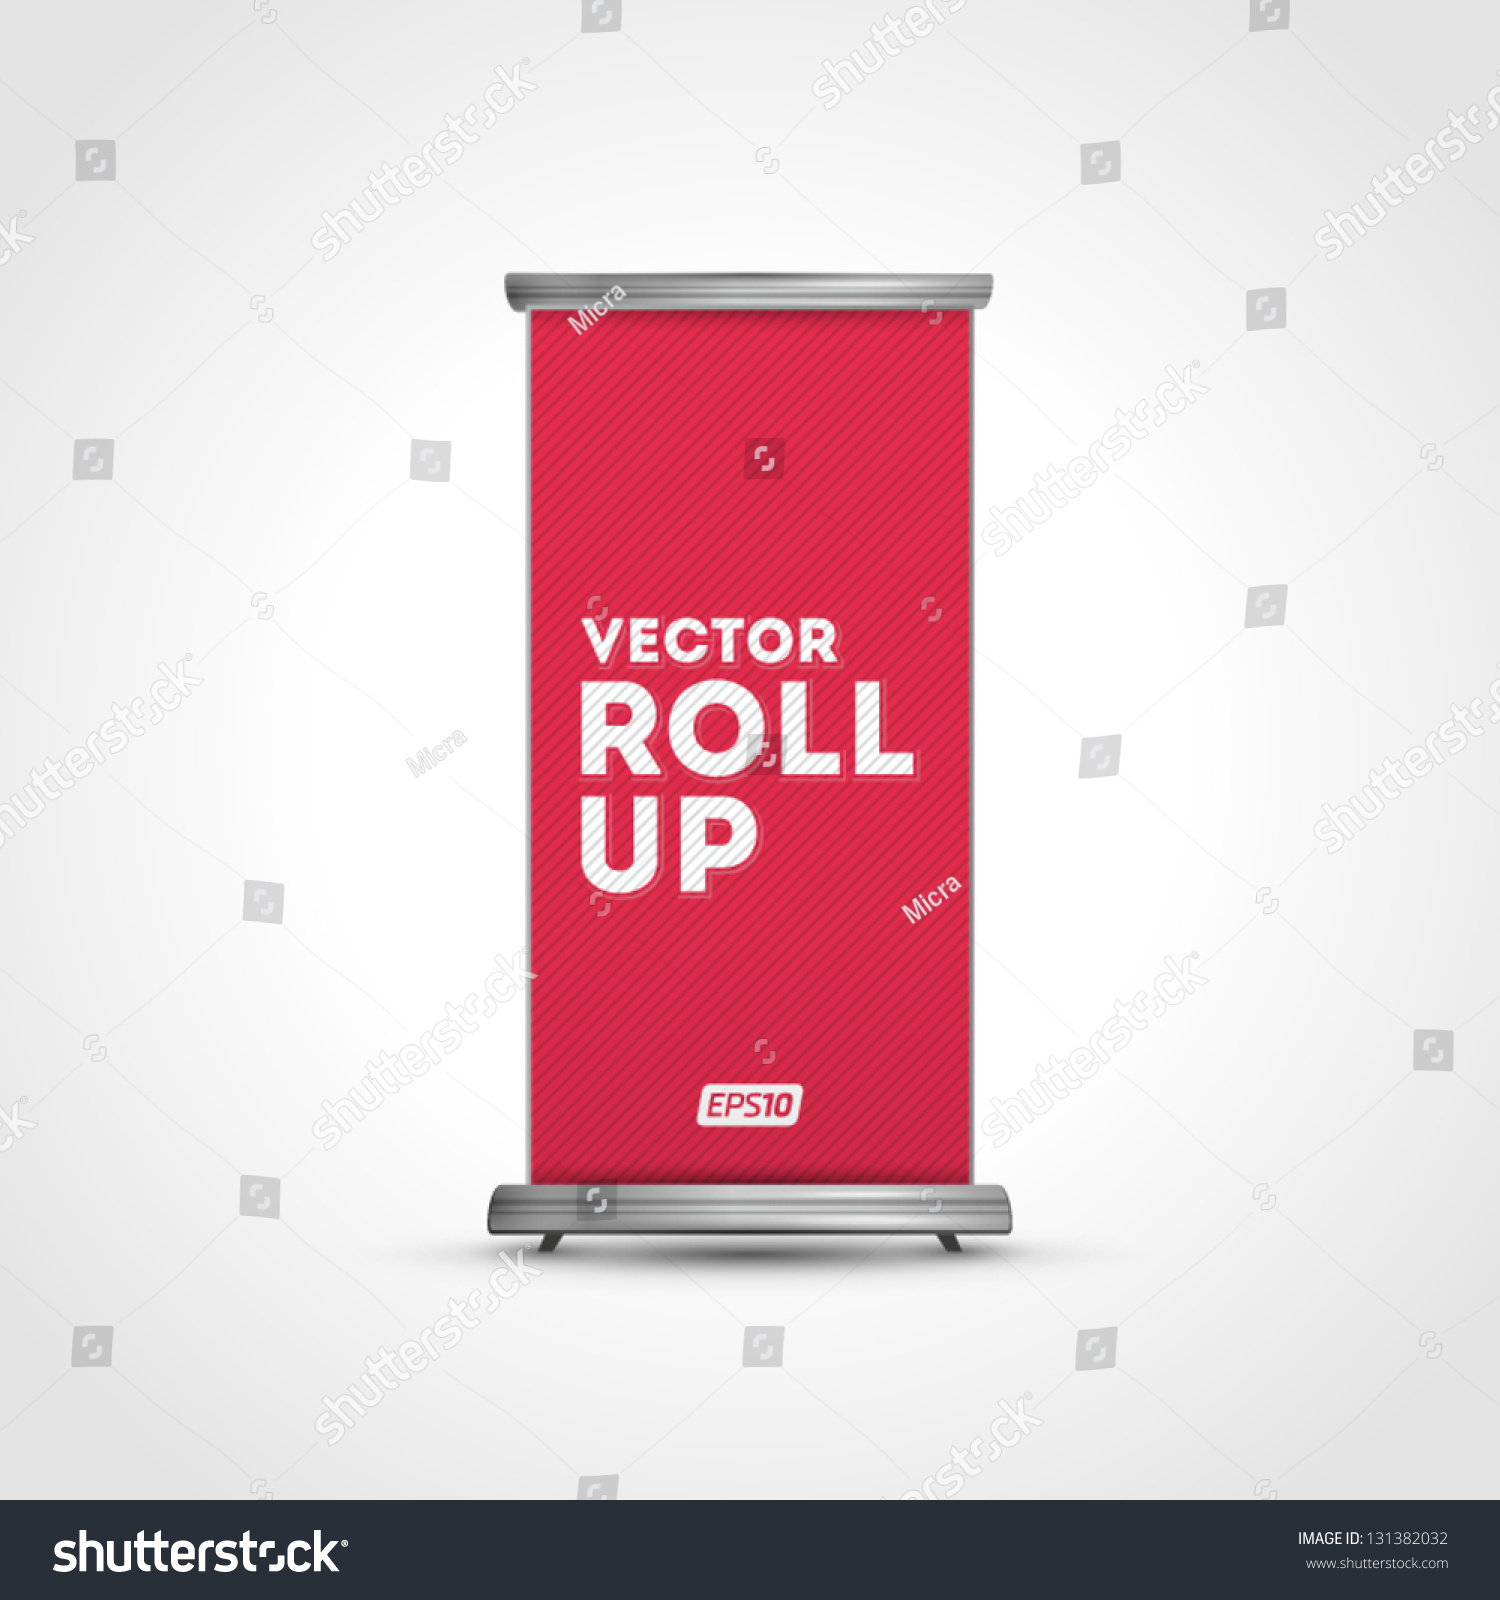 Vector Roll Stock Vector (Royalty Free) 131382032 - Shutterstock